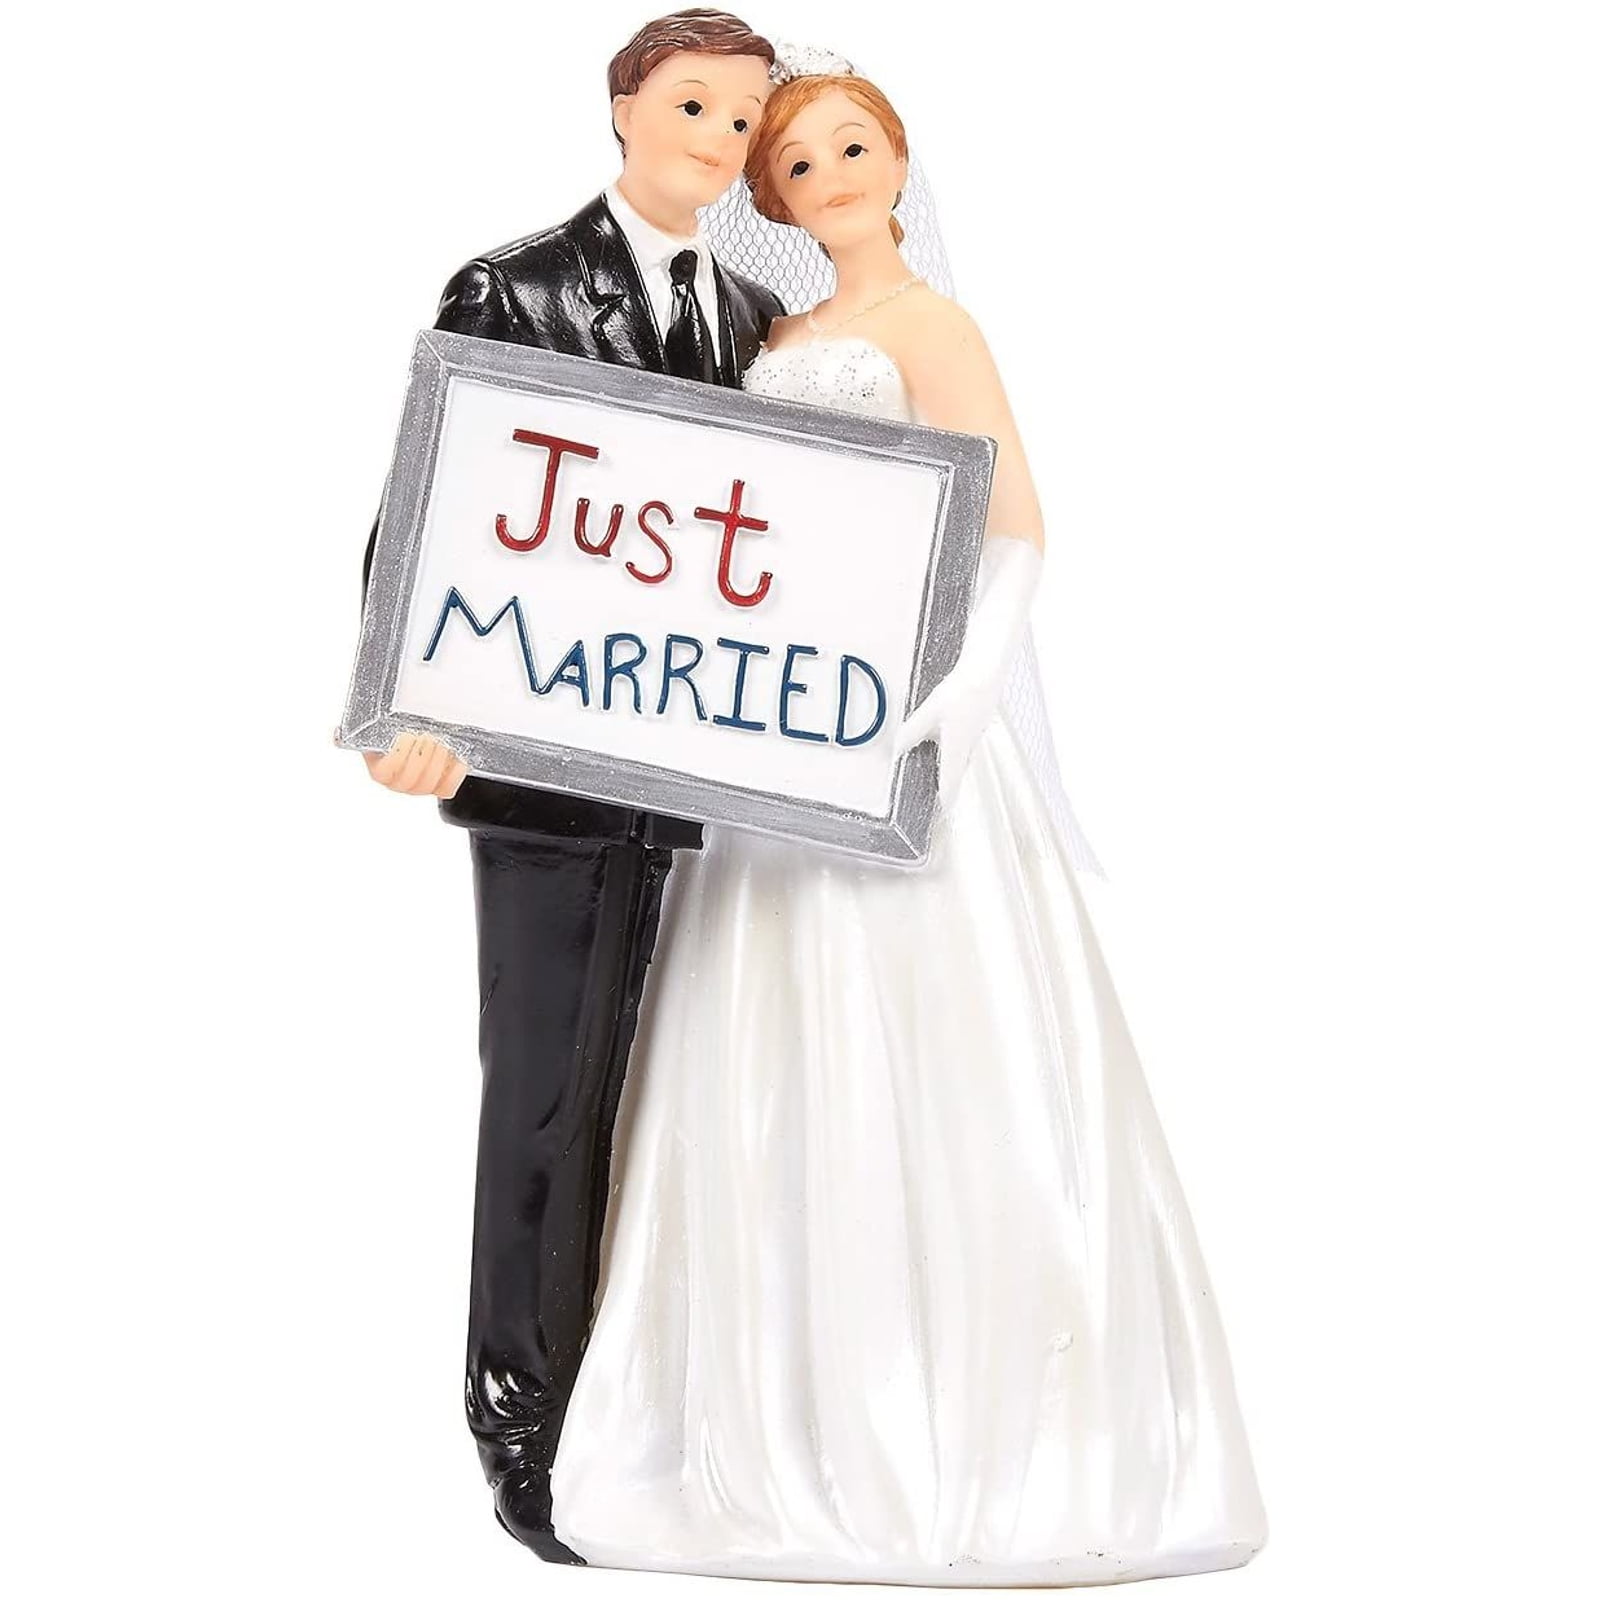 Funny Polyresin Wedding Figurine Cake Topper Bride Groom Humor Marriage Favors 